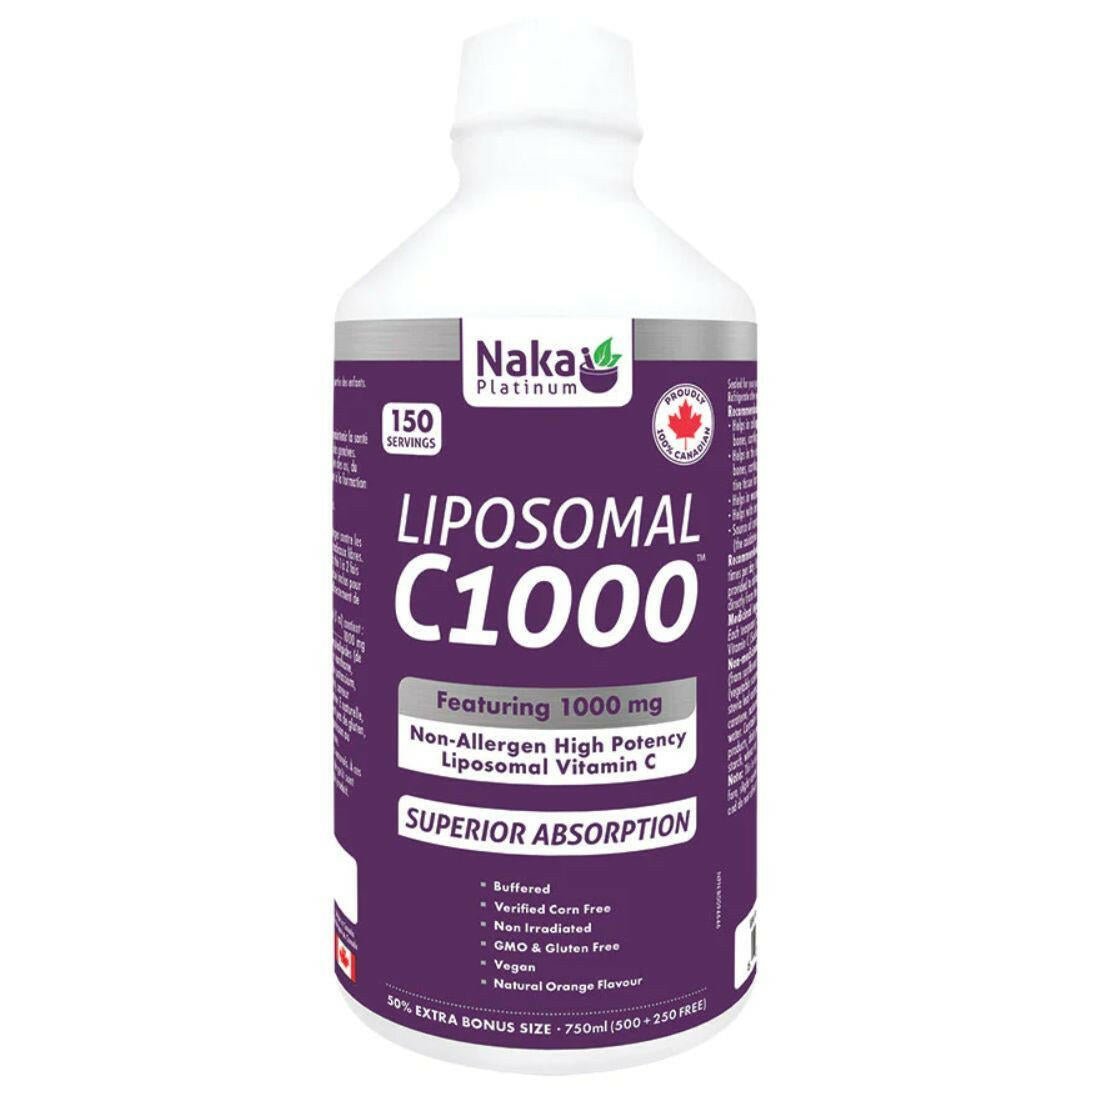 Naka Platinum Liposomal Vitamin C 1000mg C1000 (750mL)